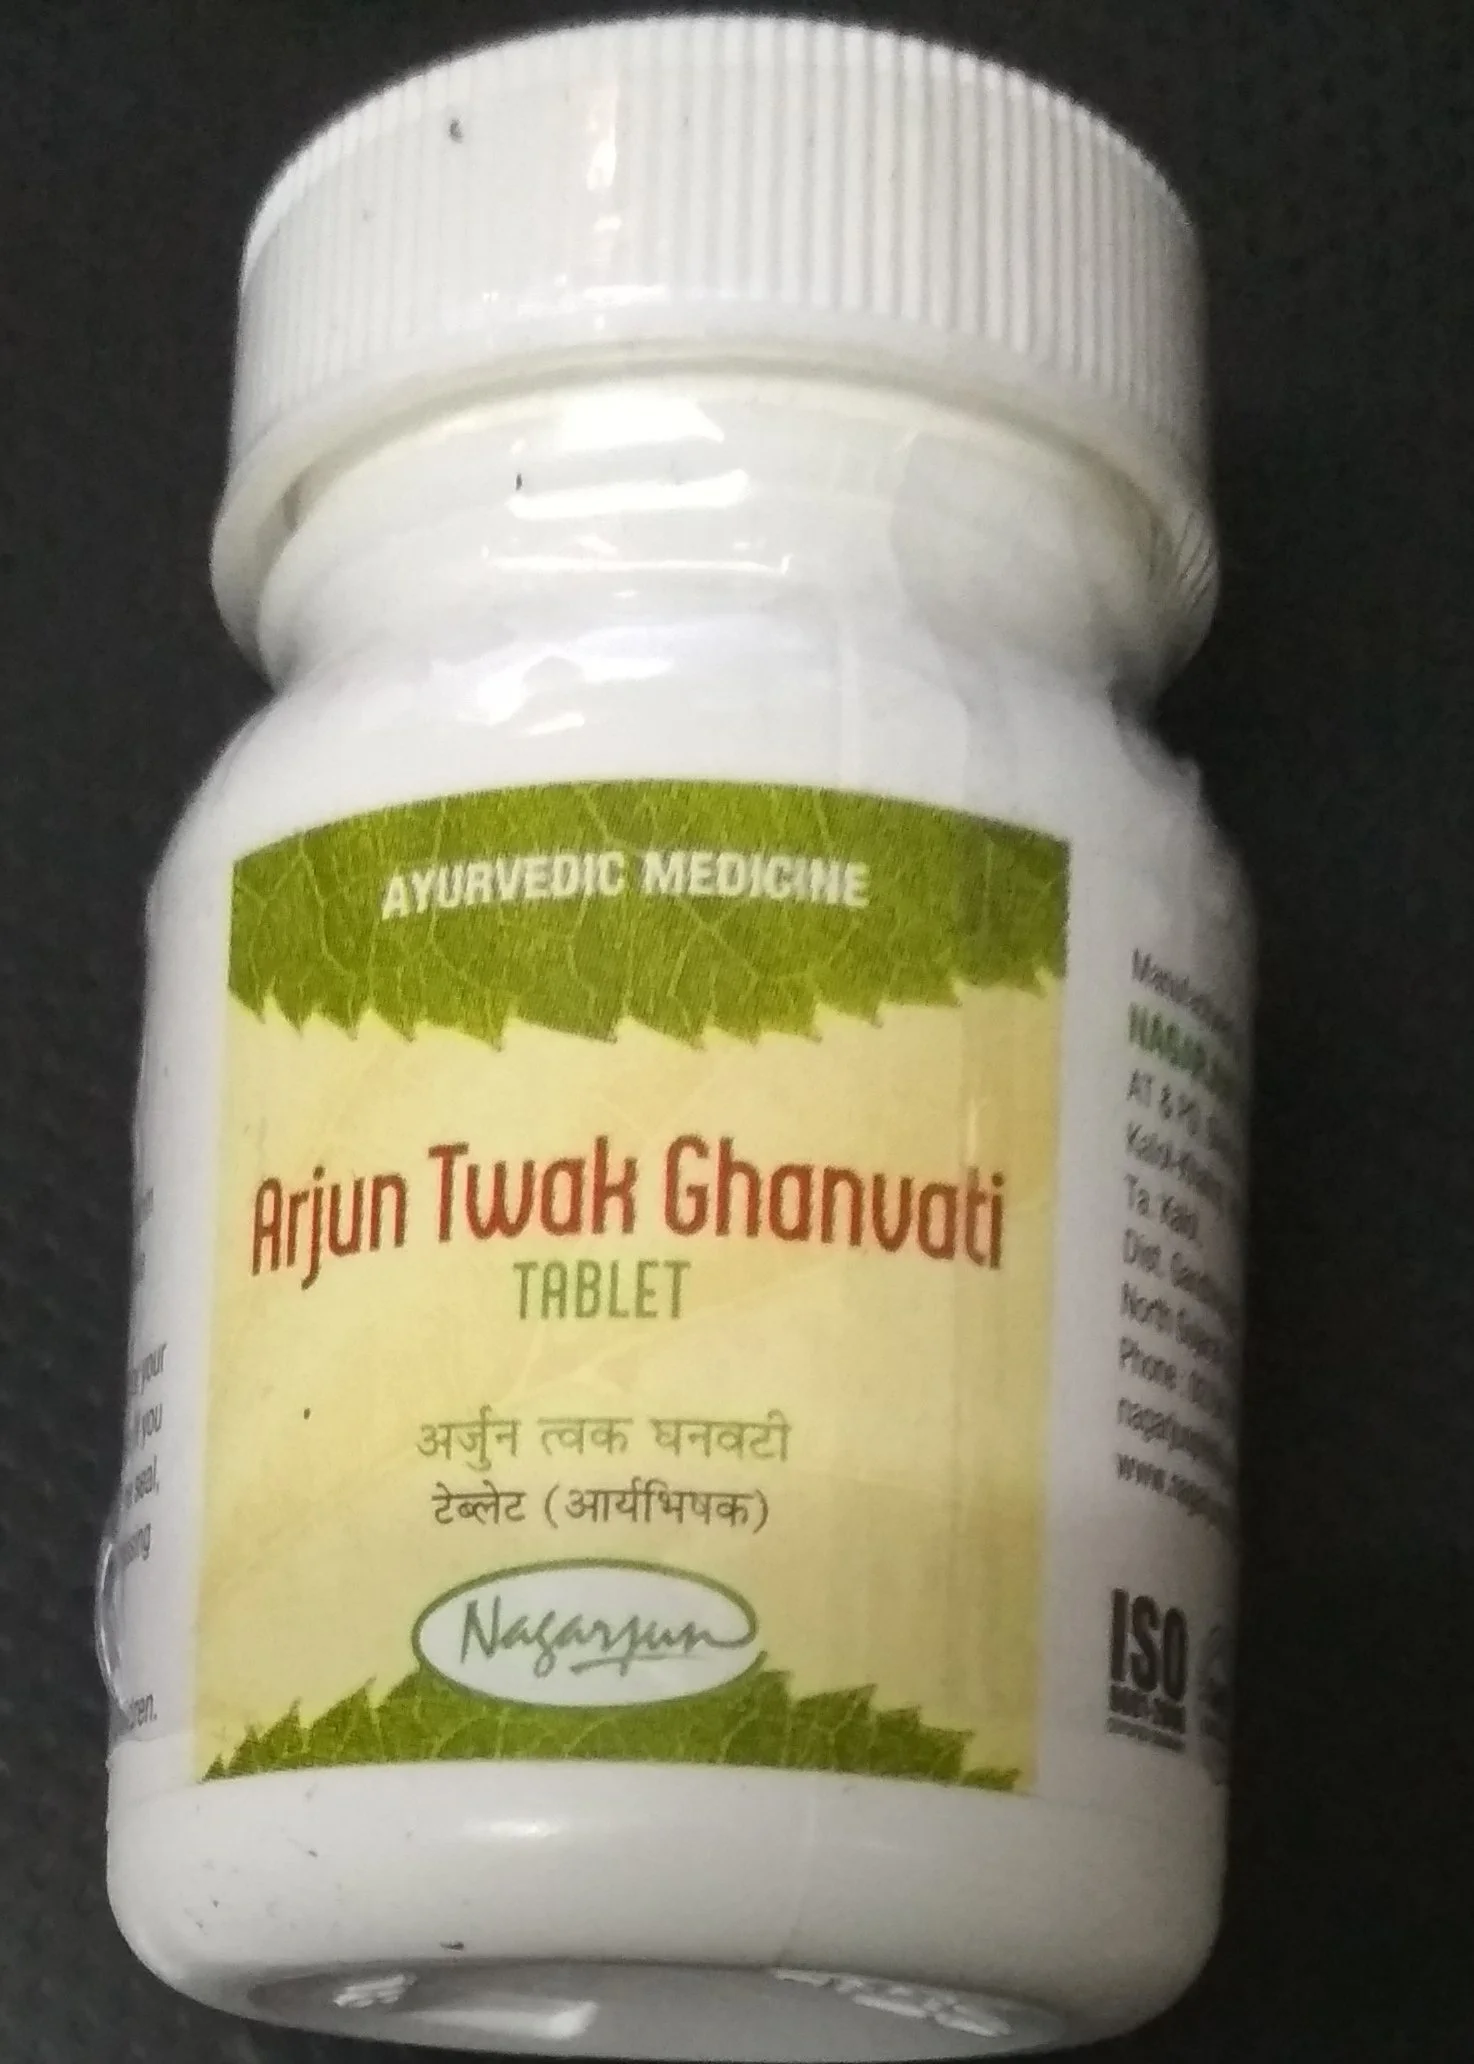 arjuntwak ghanvati 1200tab upto 20% off free shipping nagarjun pharma gujarat